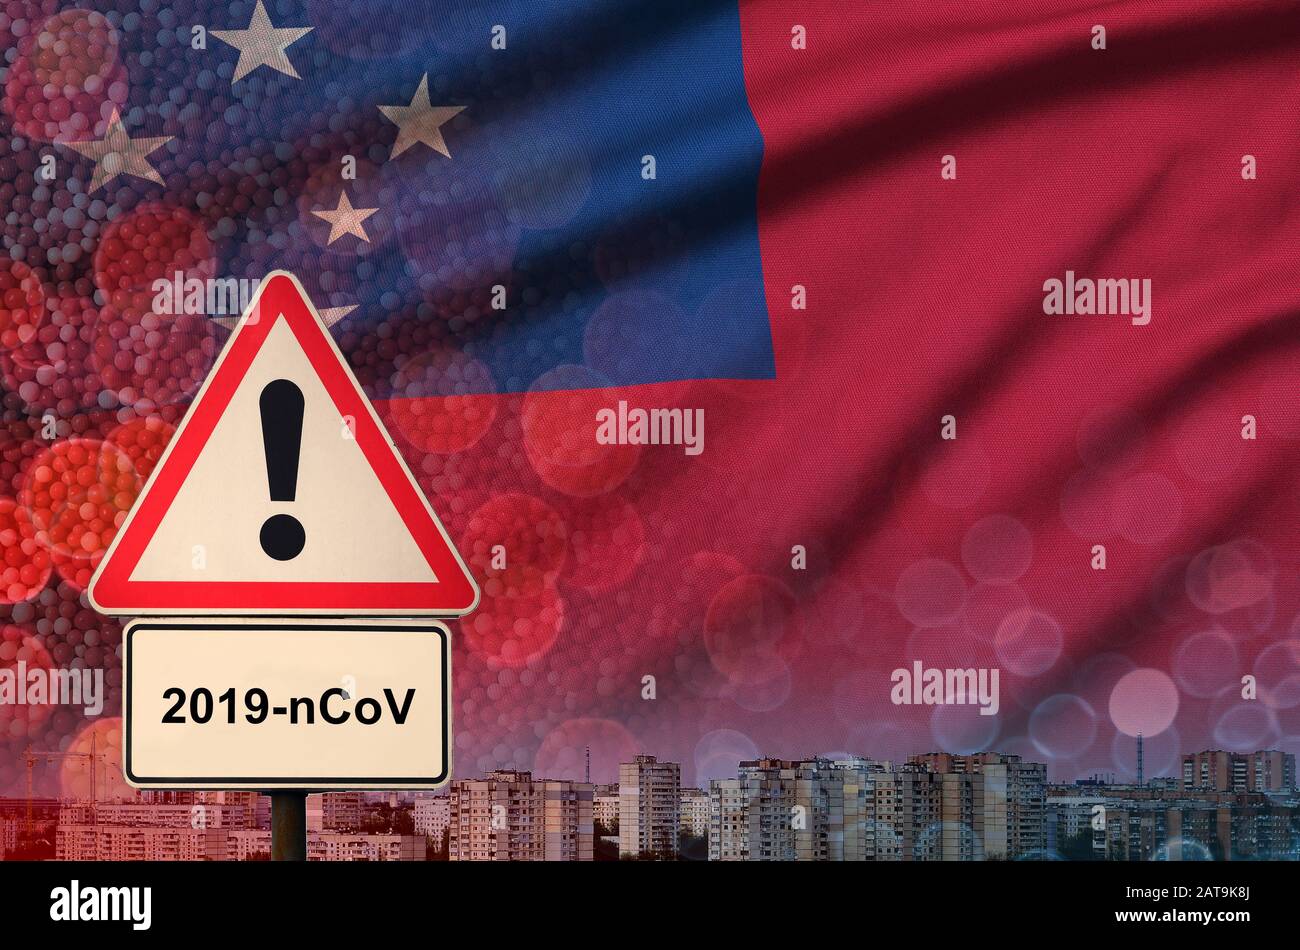 Samoa flag and Coronavirus 2019-nCoV alert sign. Concept of high probability of novel coronavirus outbreak through traveling Chinese tourists Stock Photo